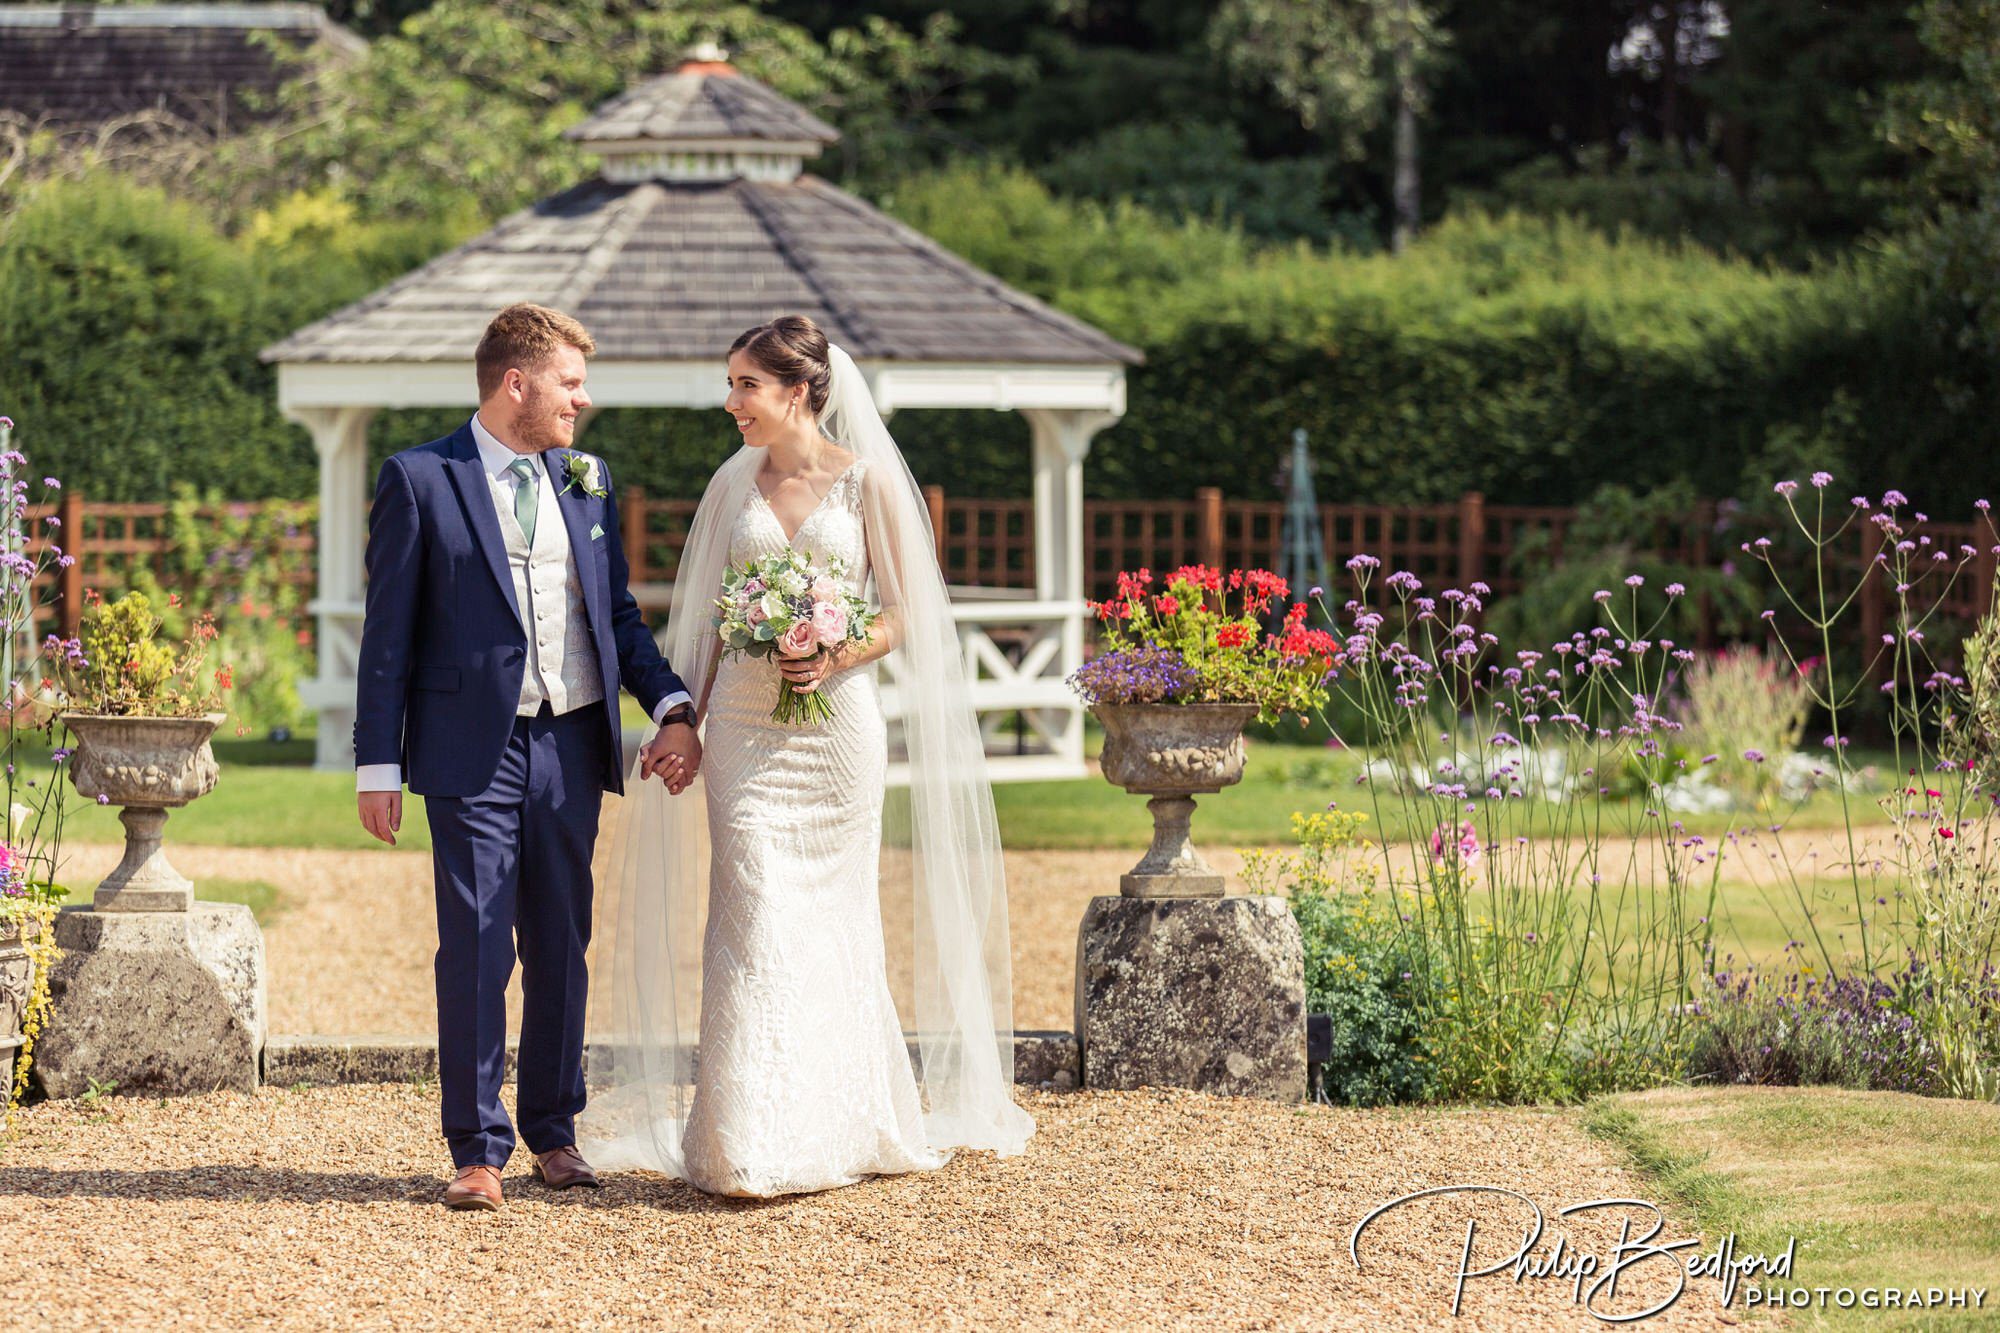 Gabriella & Michael, Hartsfield Manor Wedding, Betchworth, Surrey